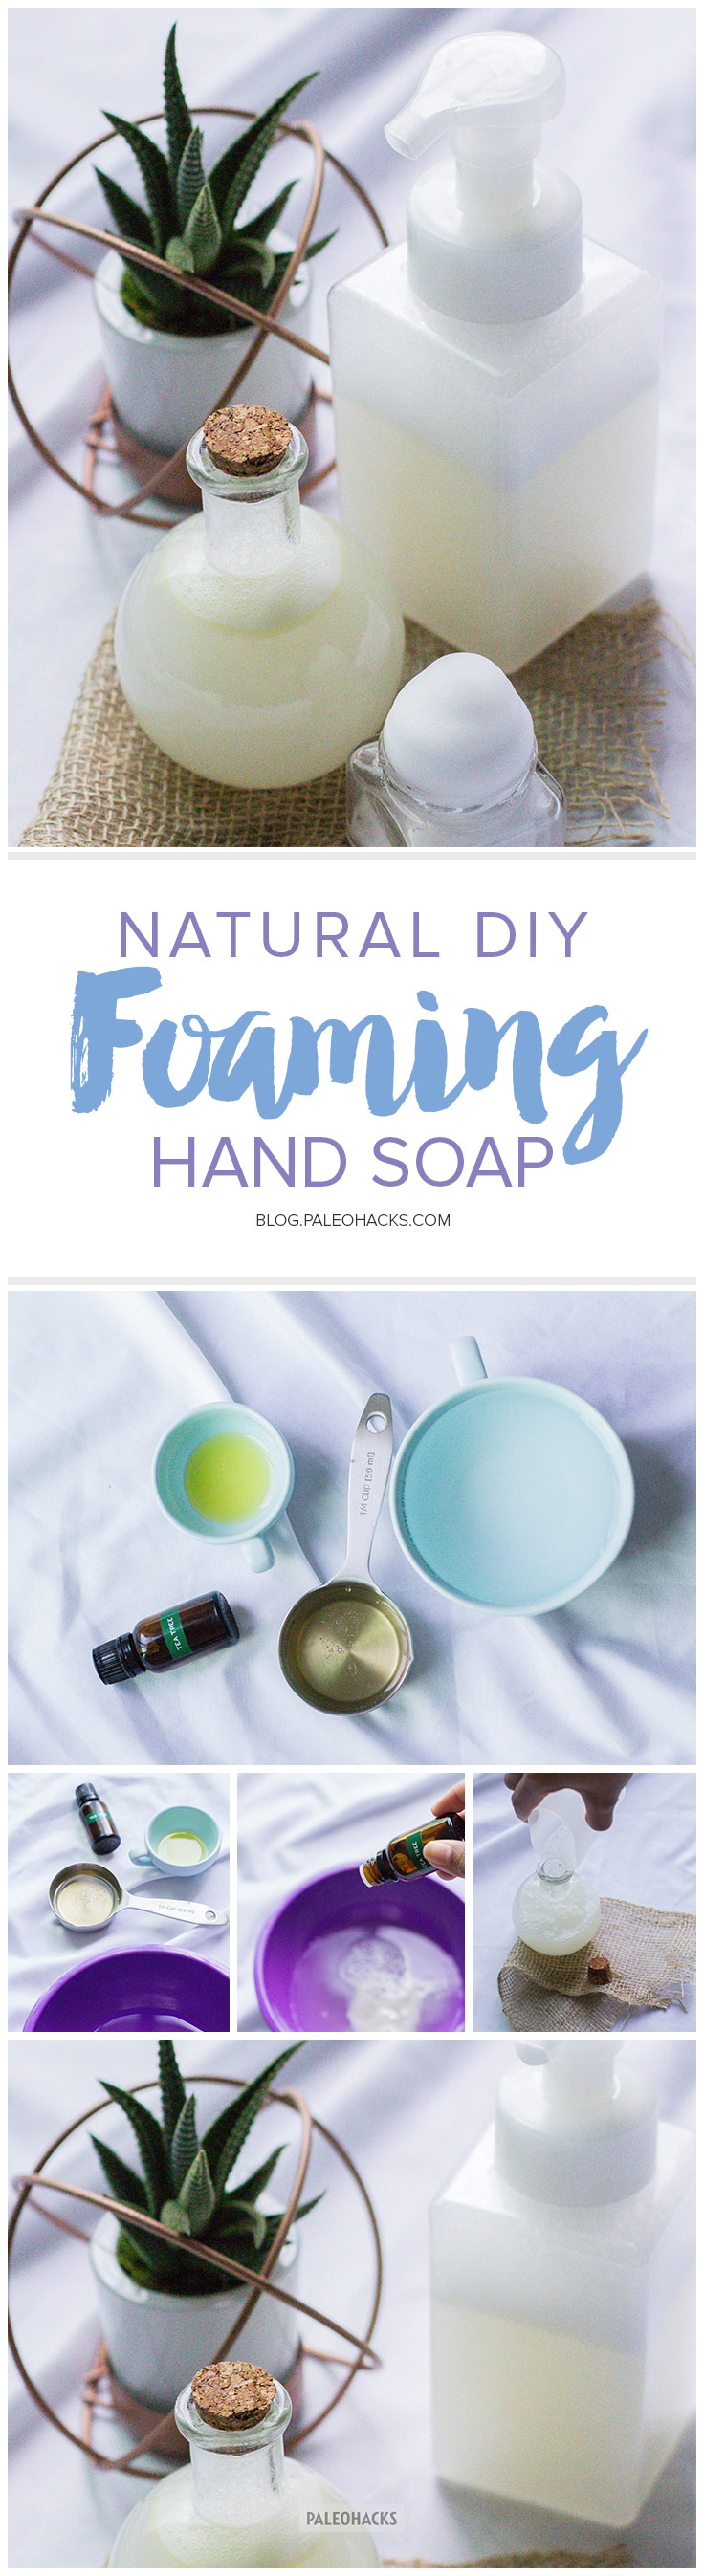 How to Make Homemade Hand Soap